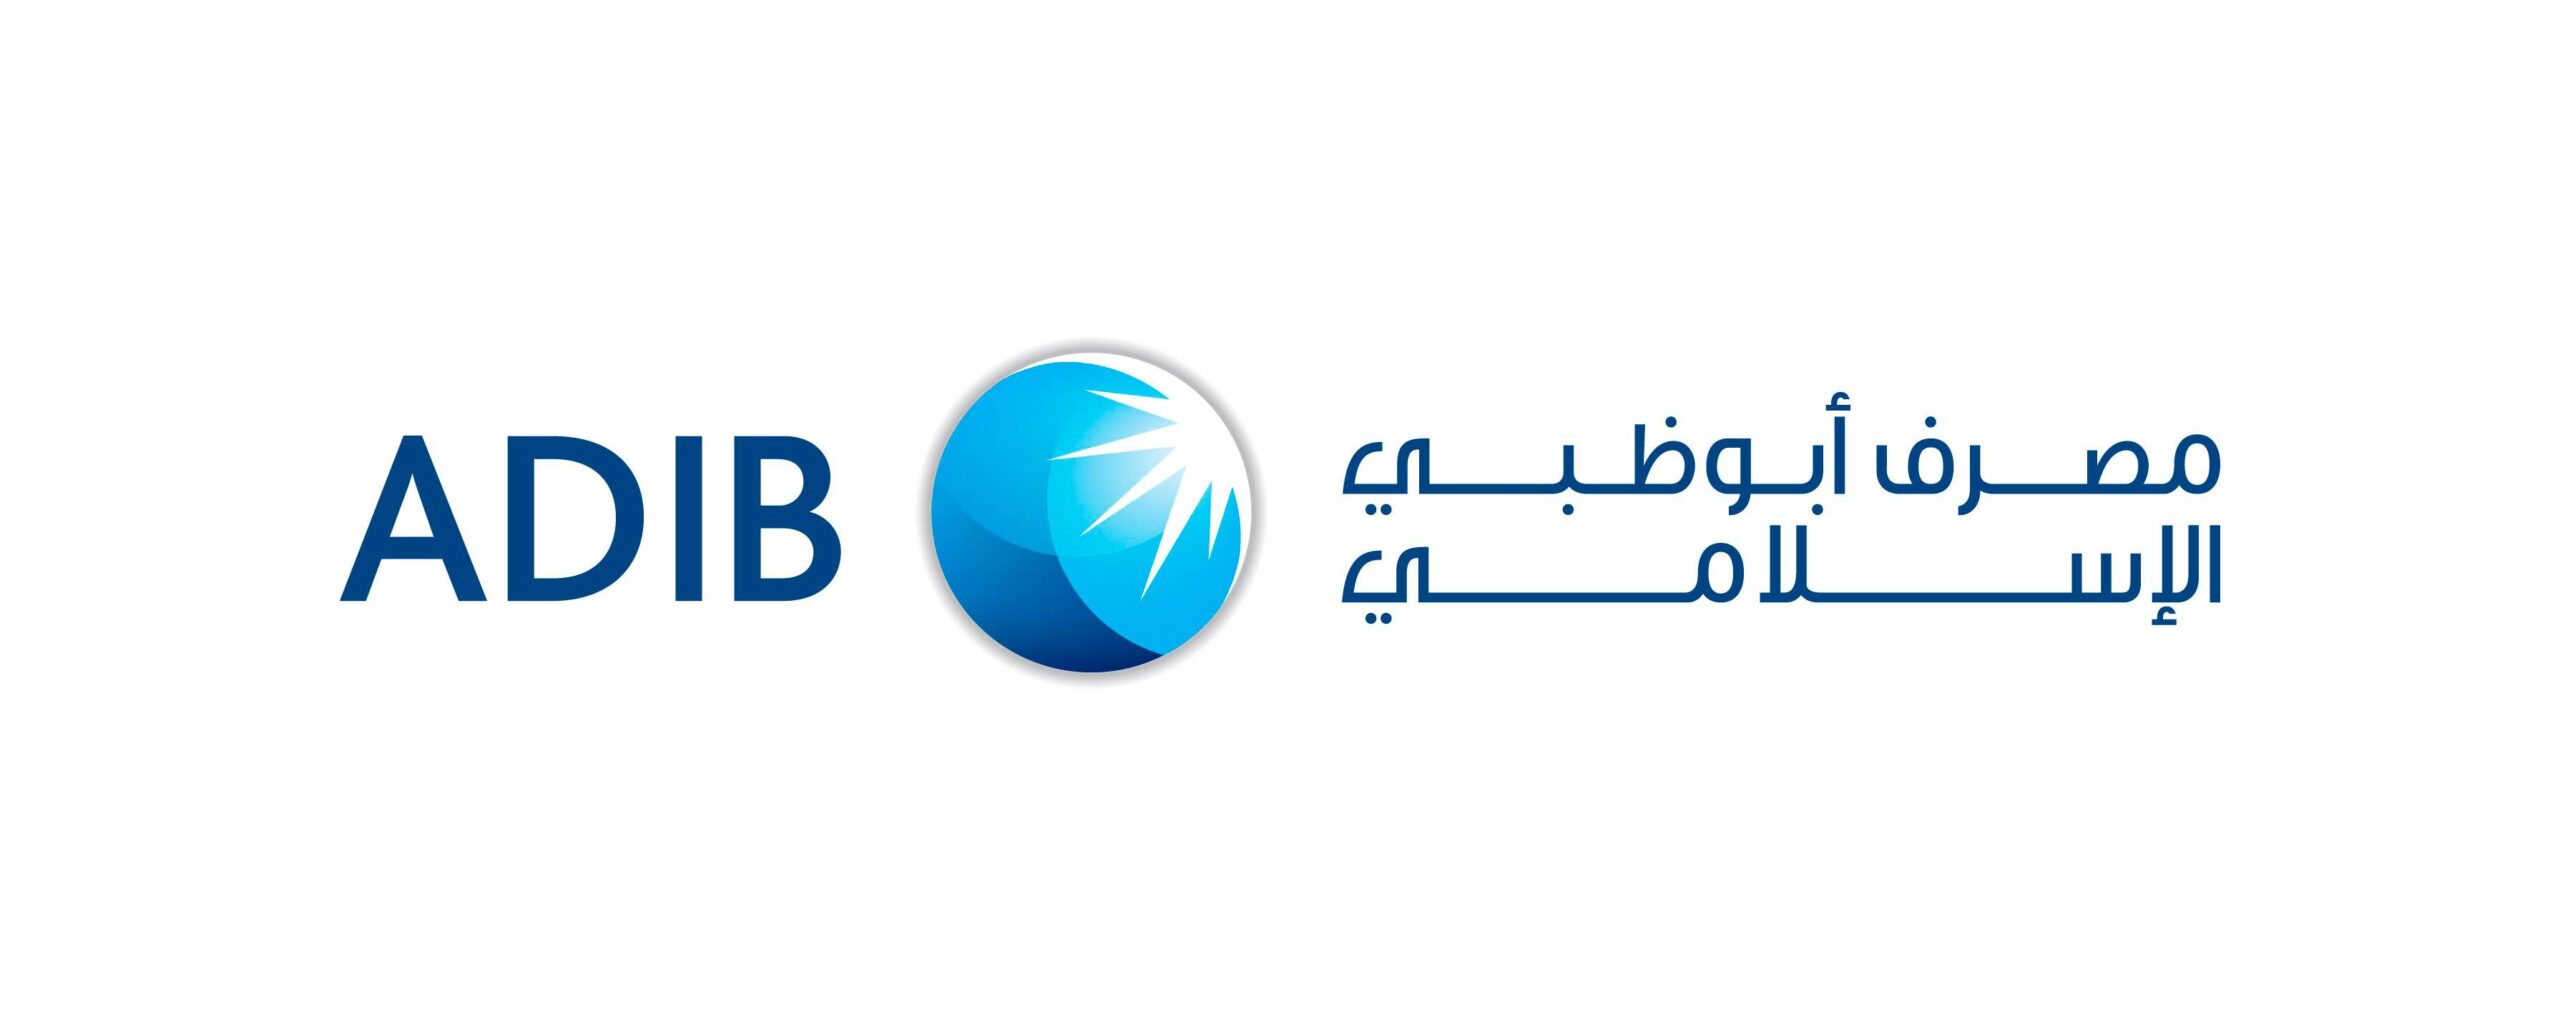 ABUB002_abu_dhabi_islamic_bank_logo_jpg